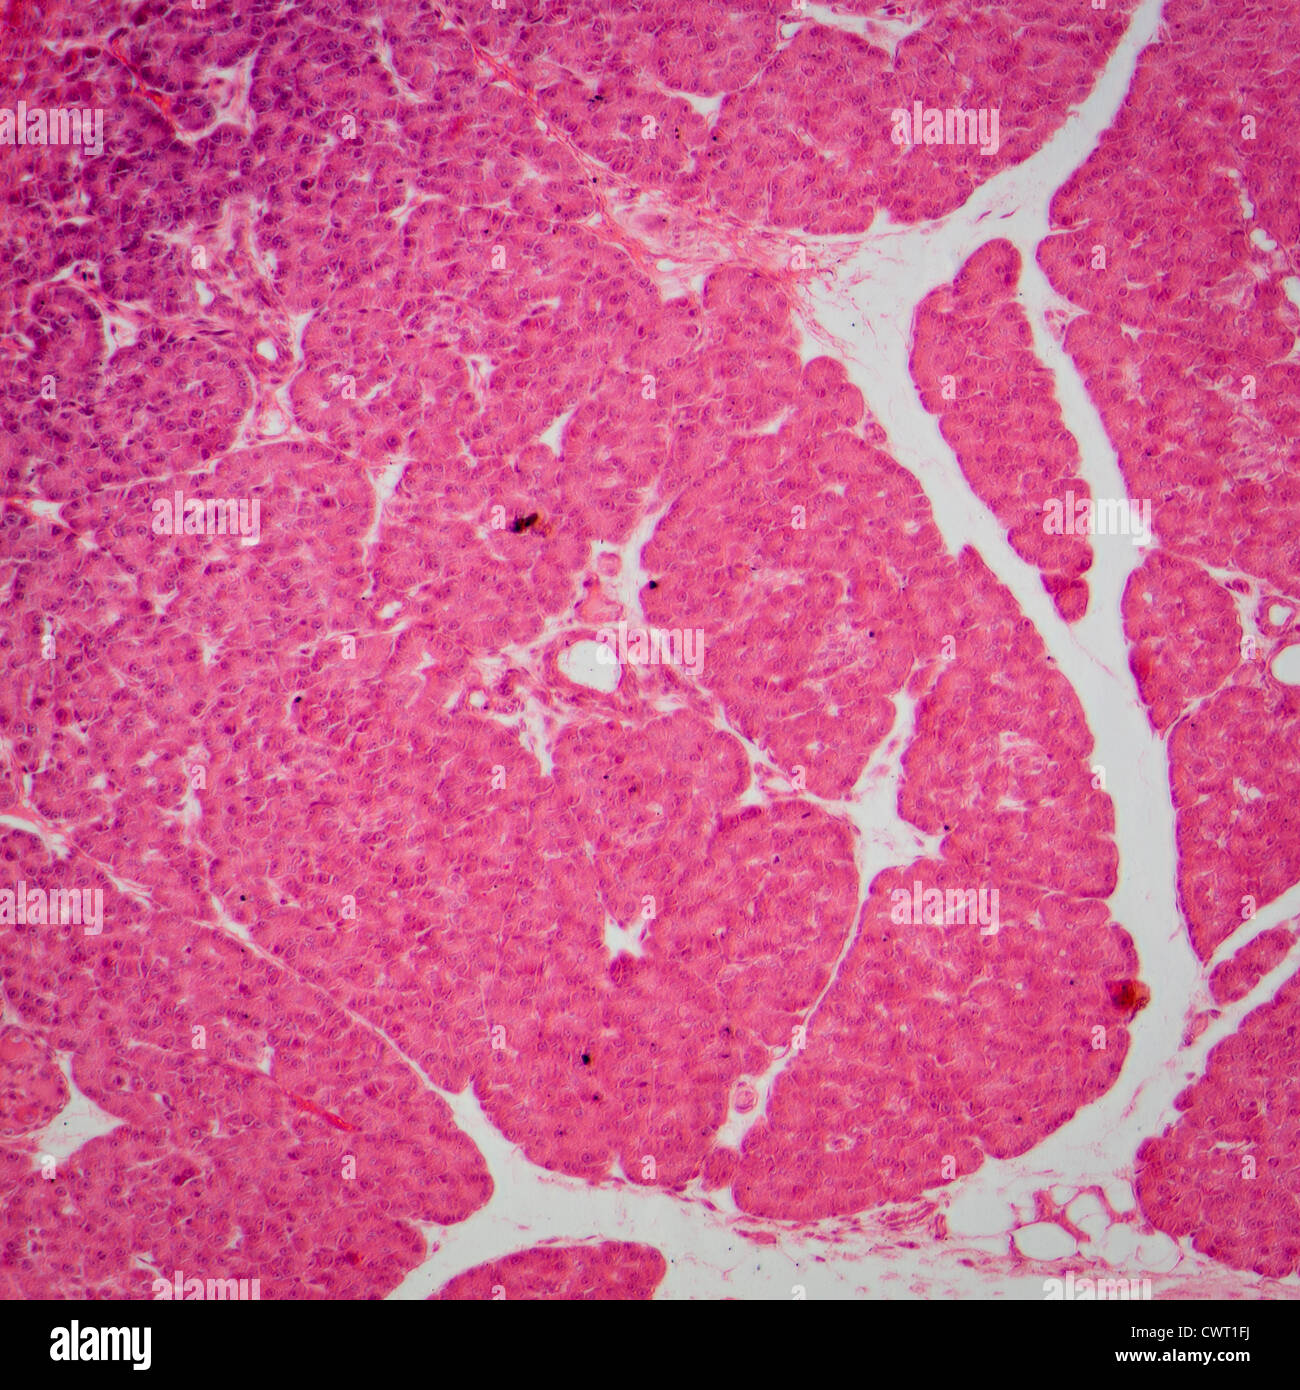 Medical science anthropotomy micrographie de la physiologie des tissus petit intestinum tenue Banque D'Images